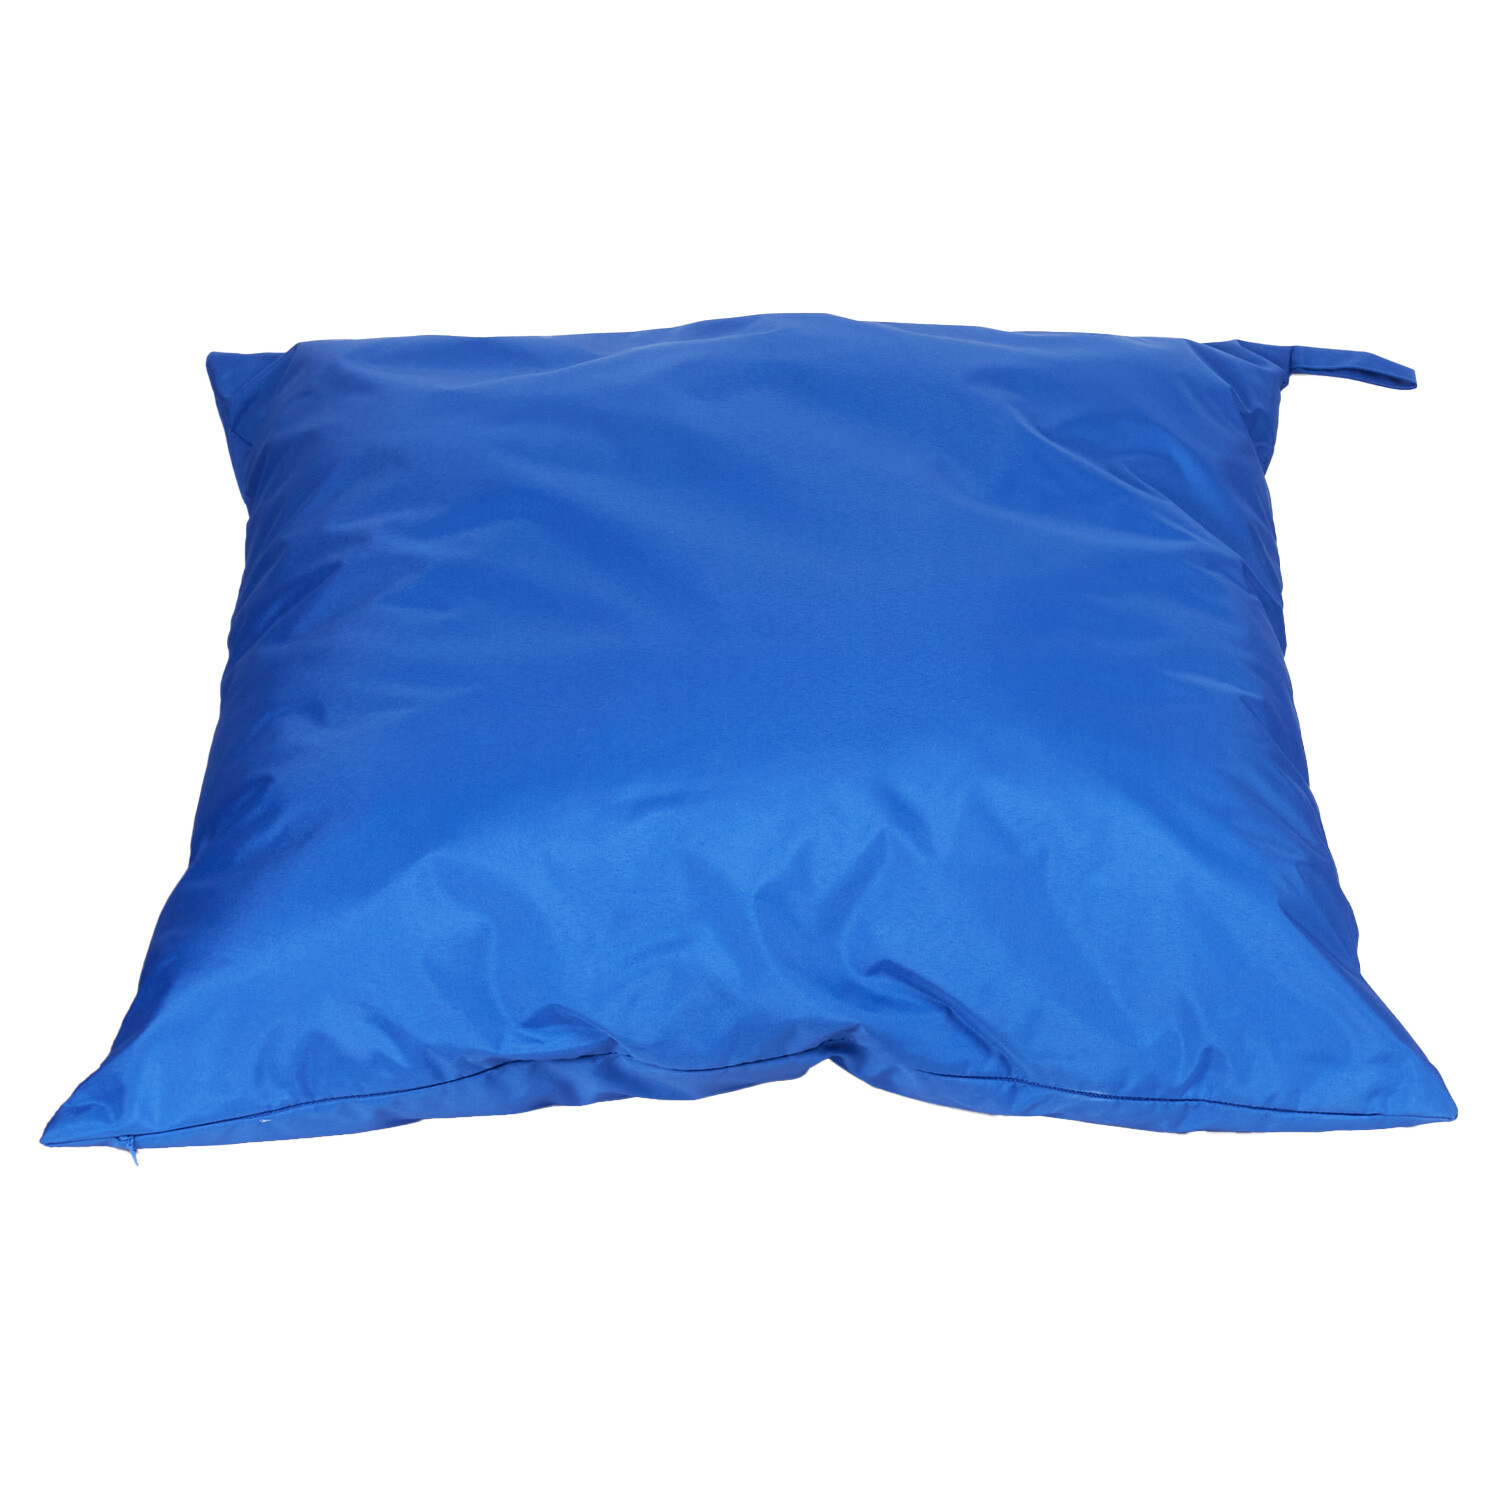 Outdoor Floor Cushion - Blue Image 2